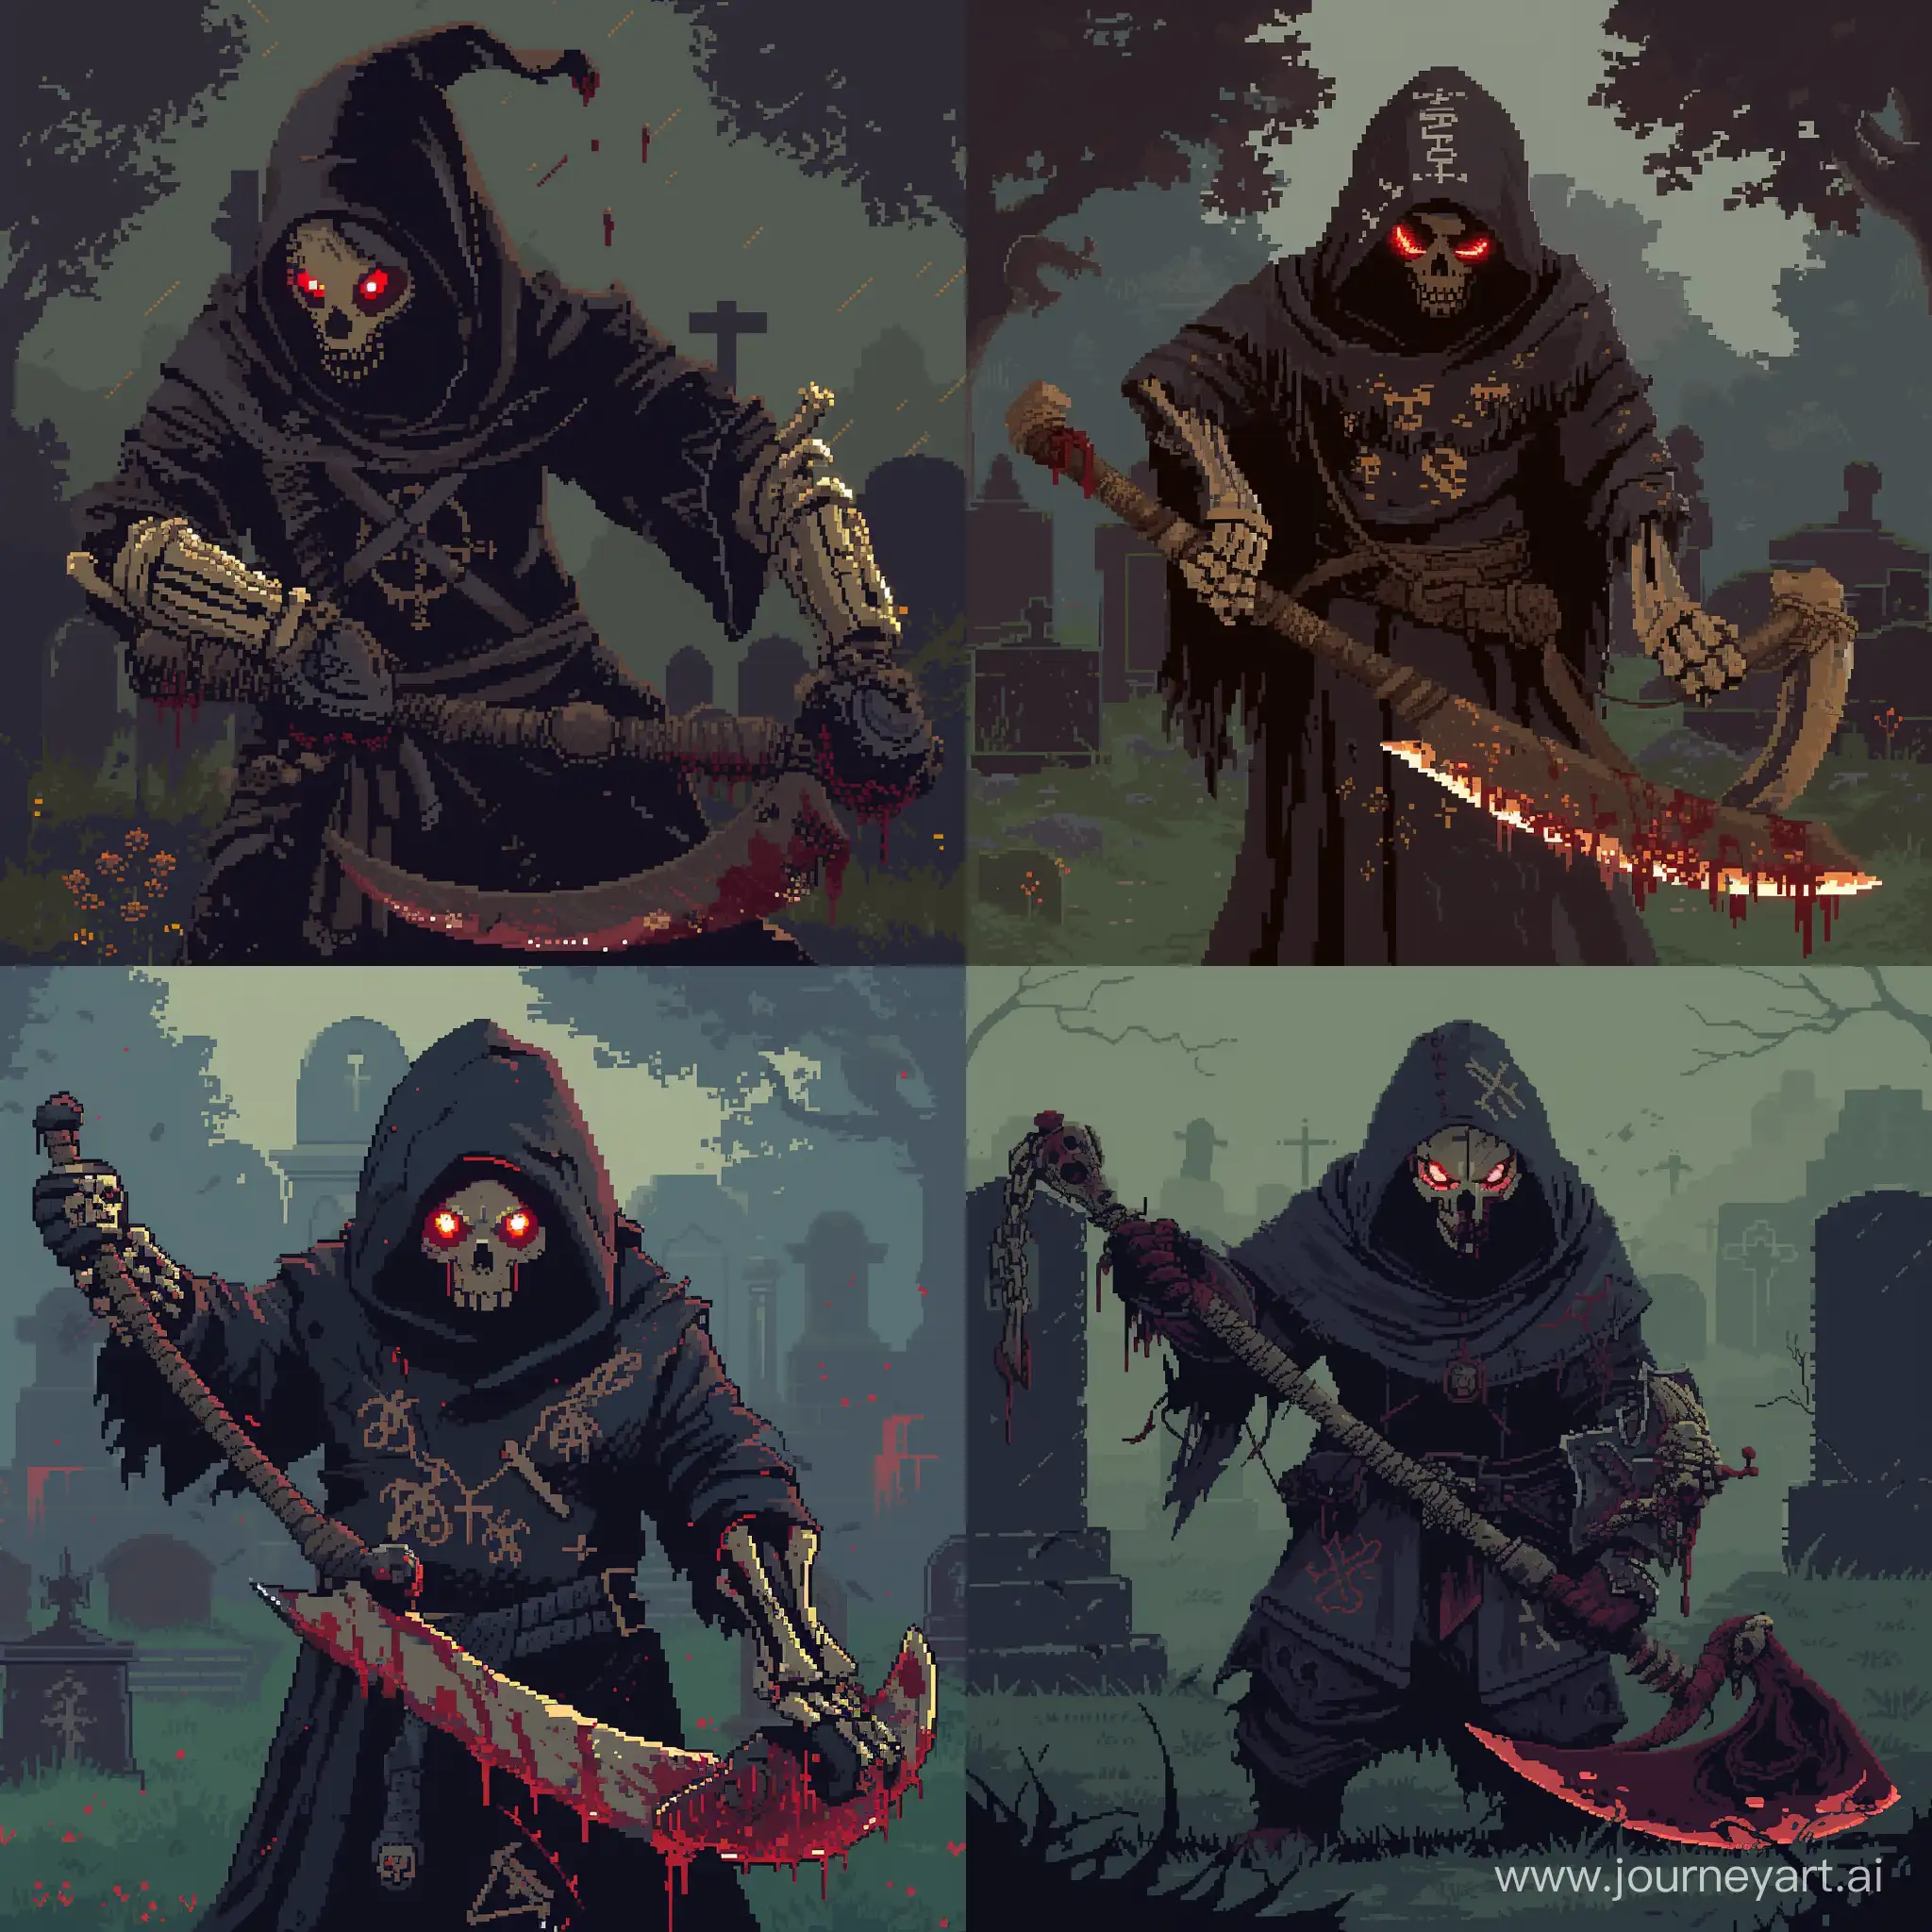 Sinister-Reaper-in-1970s-Dark-Fantasy-Pixel-Art-with-Corrupted-Bone-Scythe